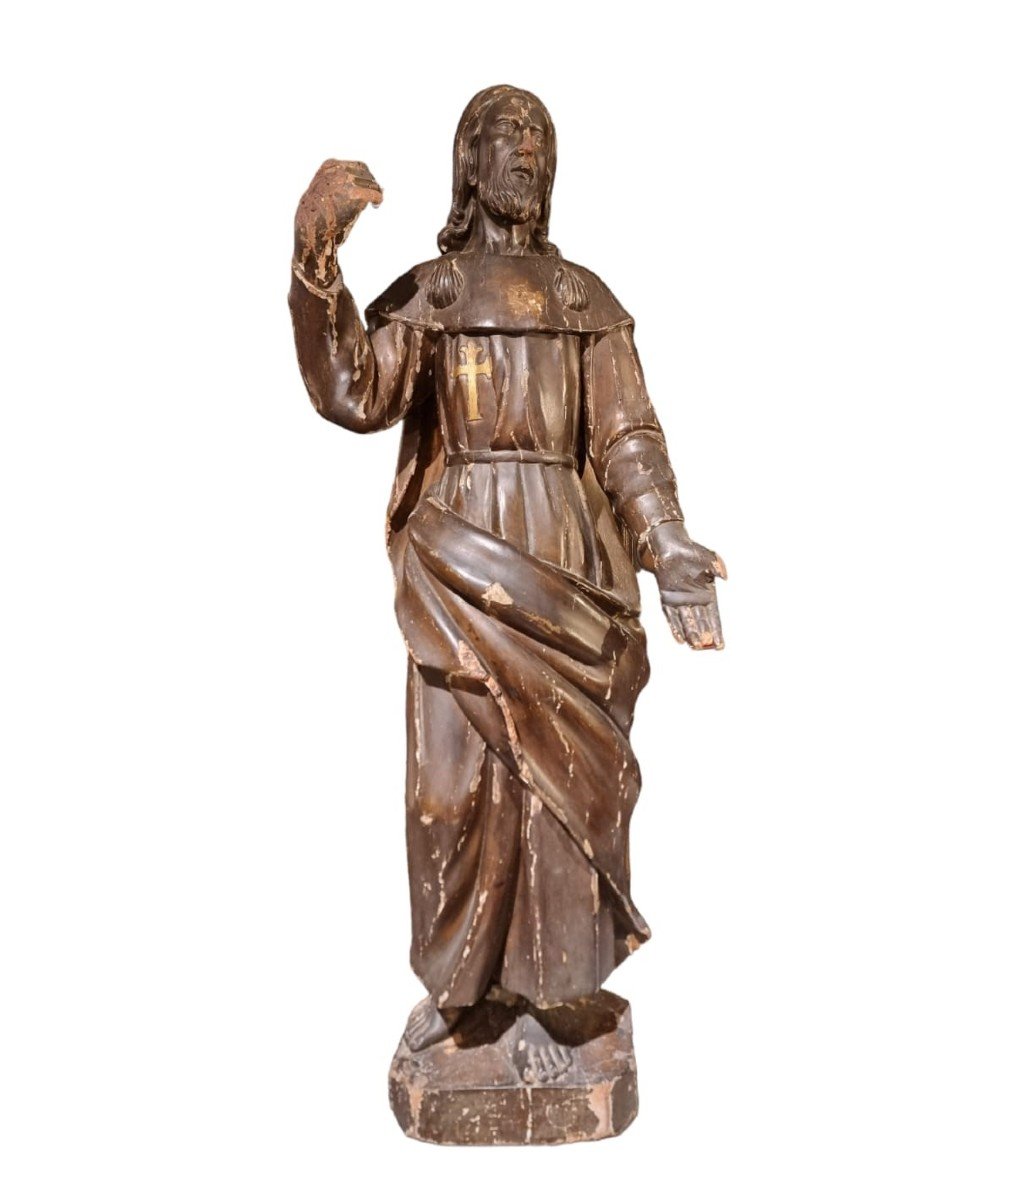 17th Century Wooden Sculpture Depicting Saint James